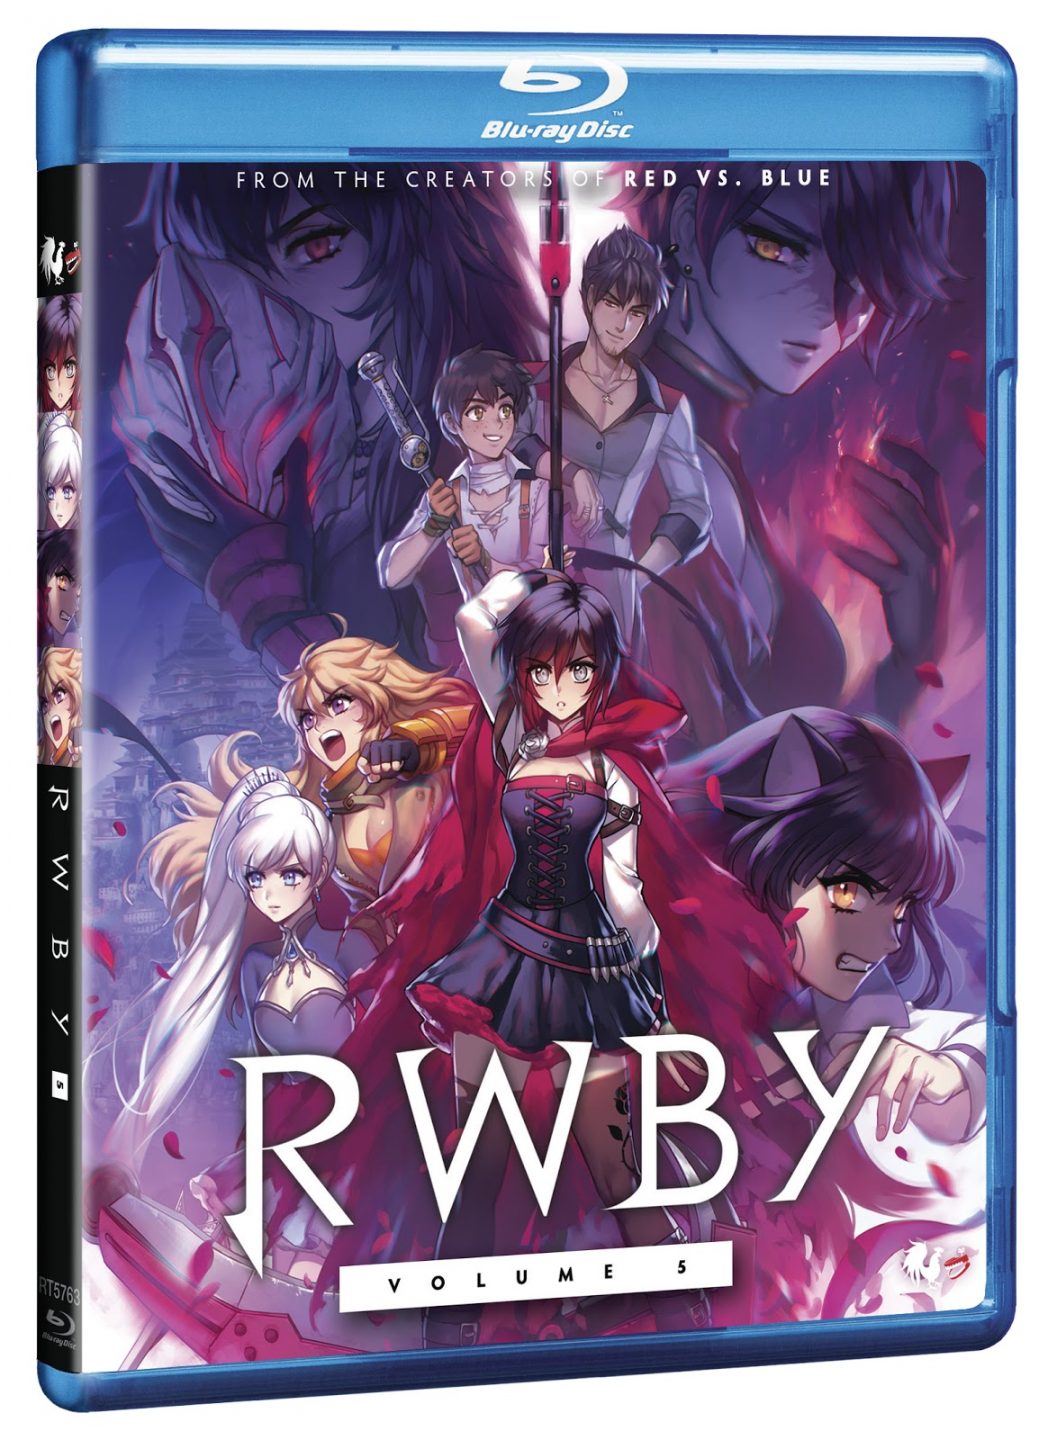 RWBY Volume 5 Blu-Ray cover (Rooster Teeth/Cinedigm)